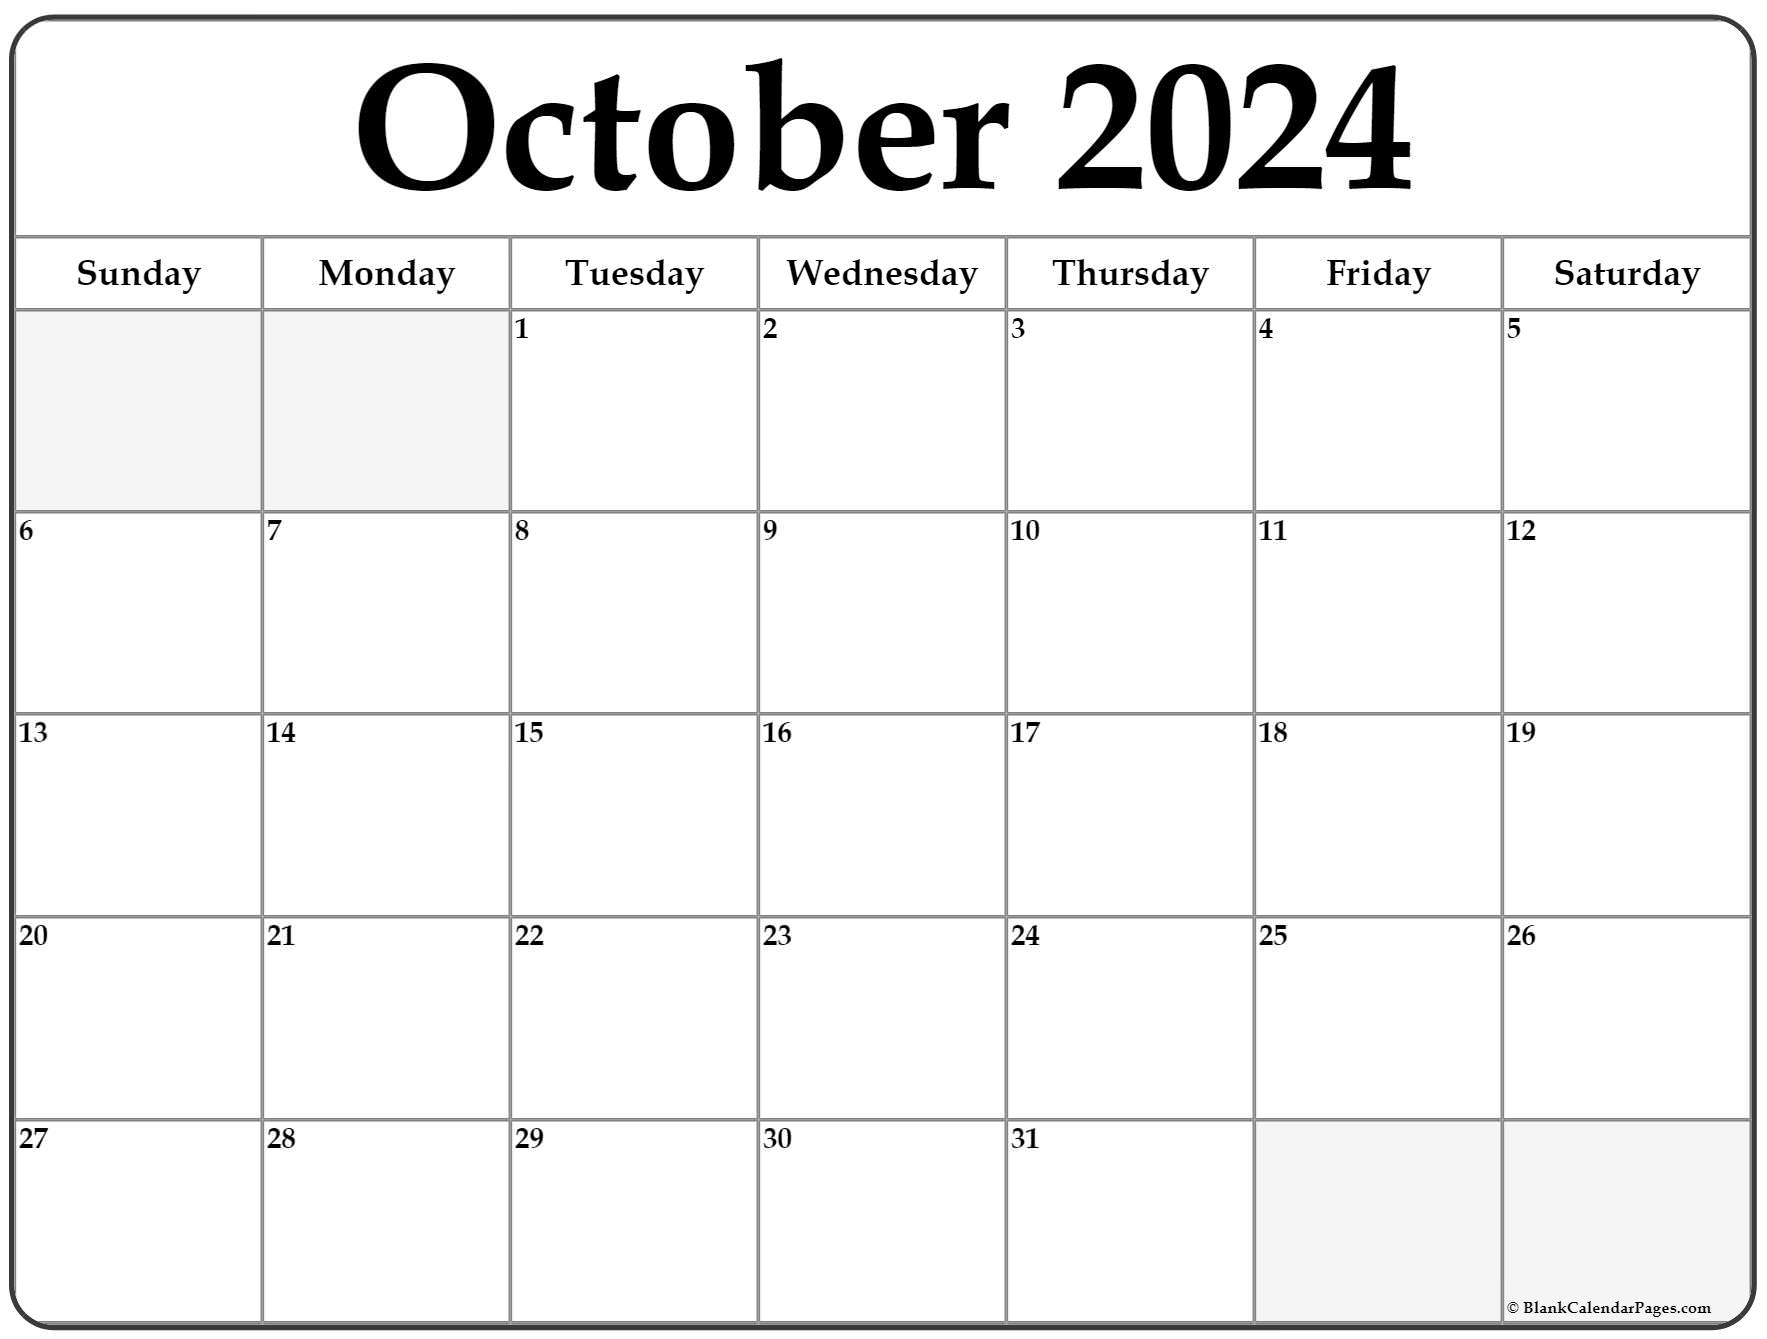 October 2022 Free Printable Calendar October 2022 Calendar | Free Printable Calendar Templates